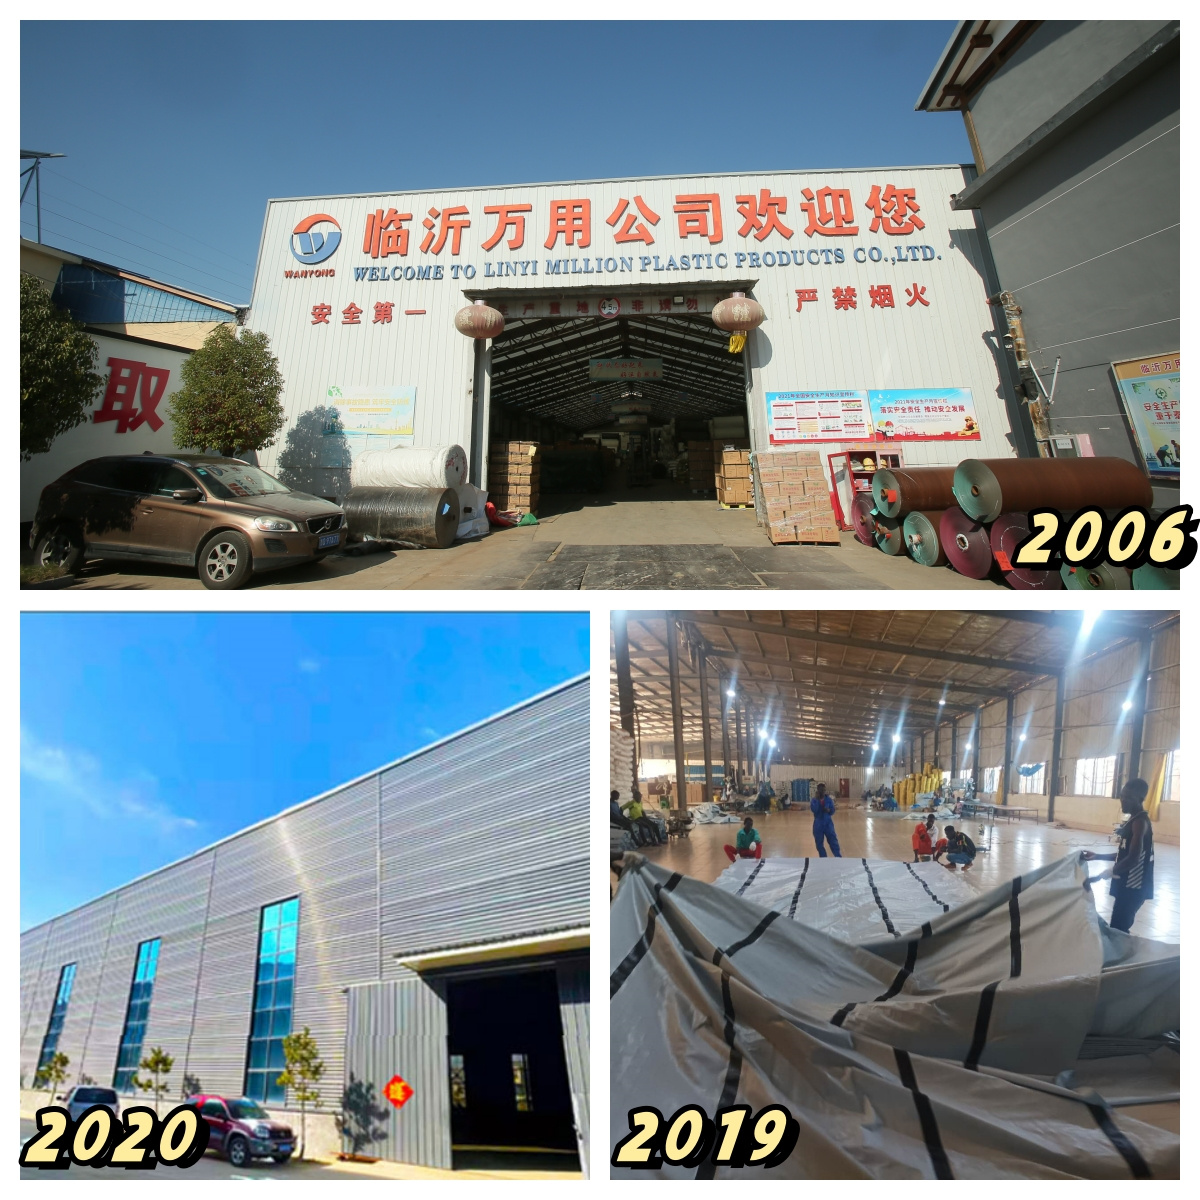 Linyi Million Plastic Products Co., Ltd.：your trusted waterproof tarpaulin expert ----Professional tarpaulin manufacturer since 2006